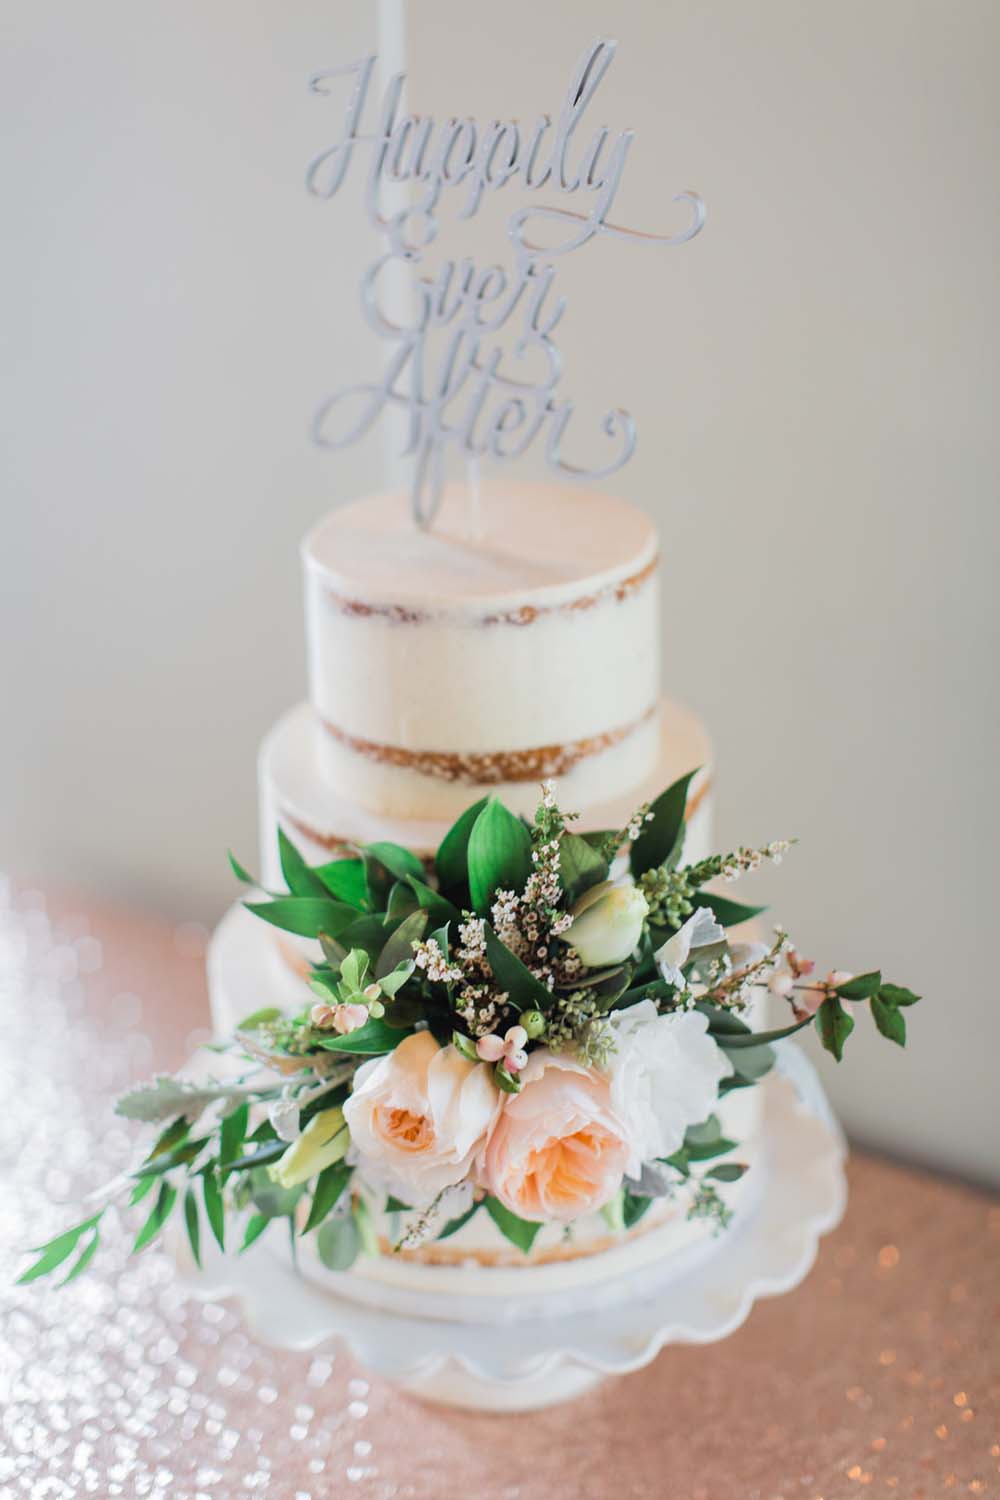 A Rustic, Whimsical Wedding in Tottenham - Wedding cake